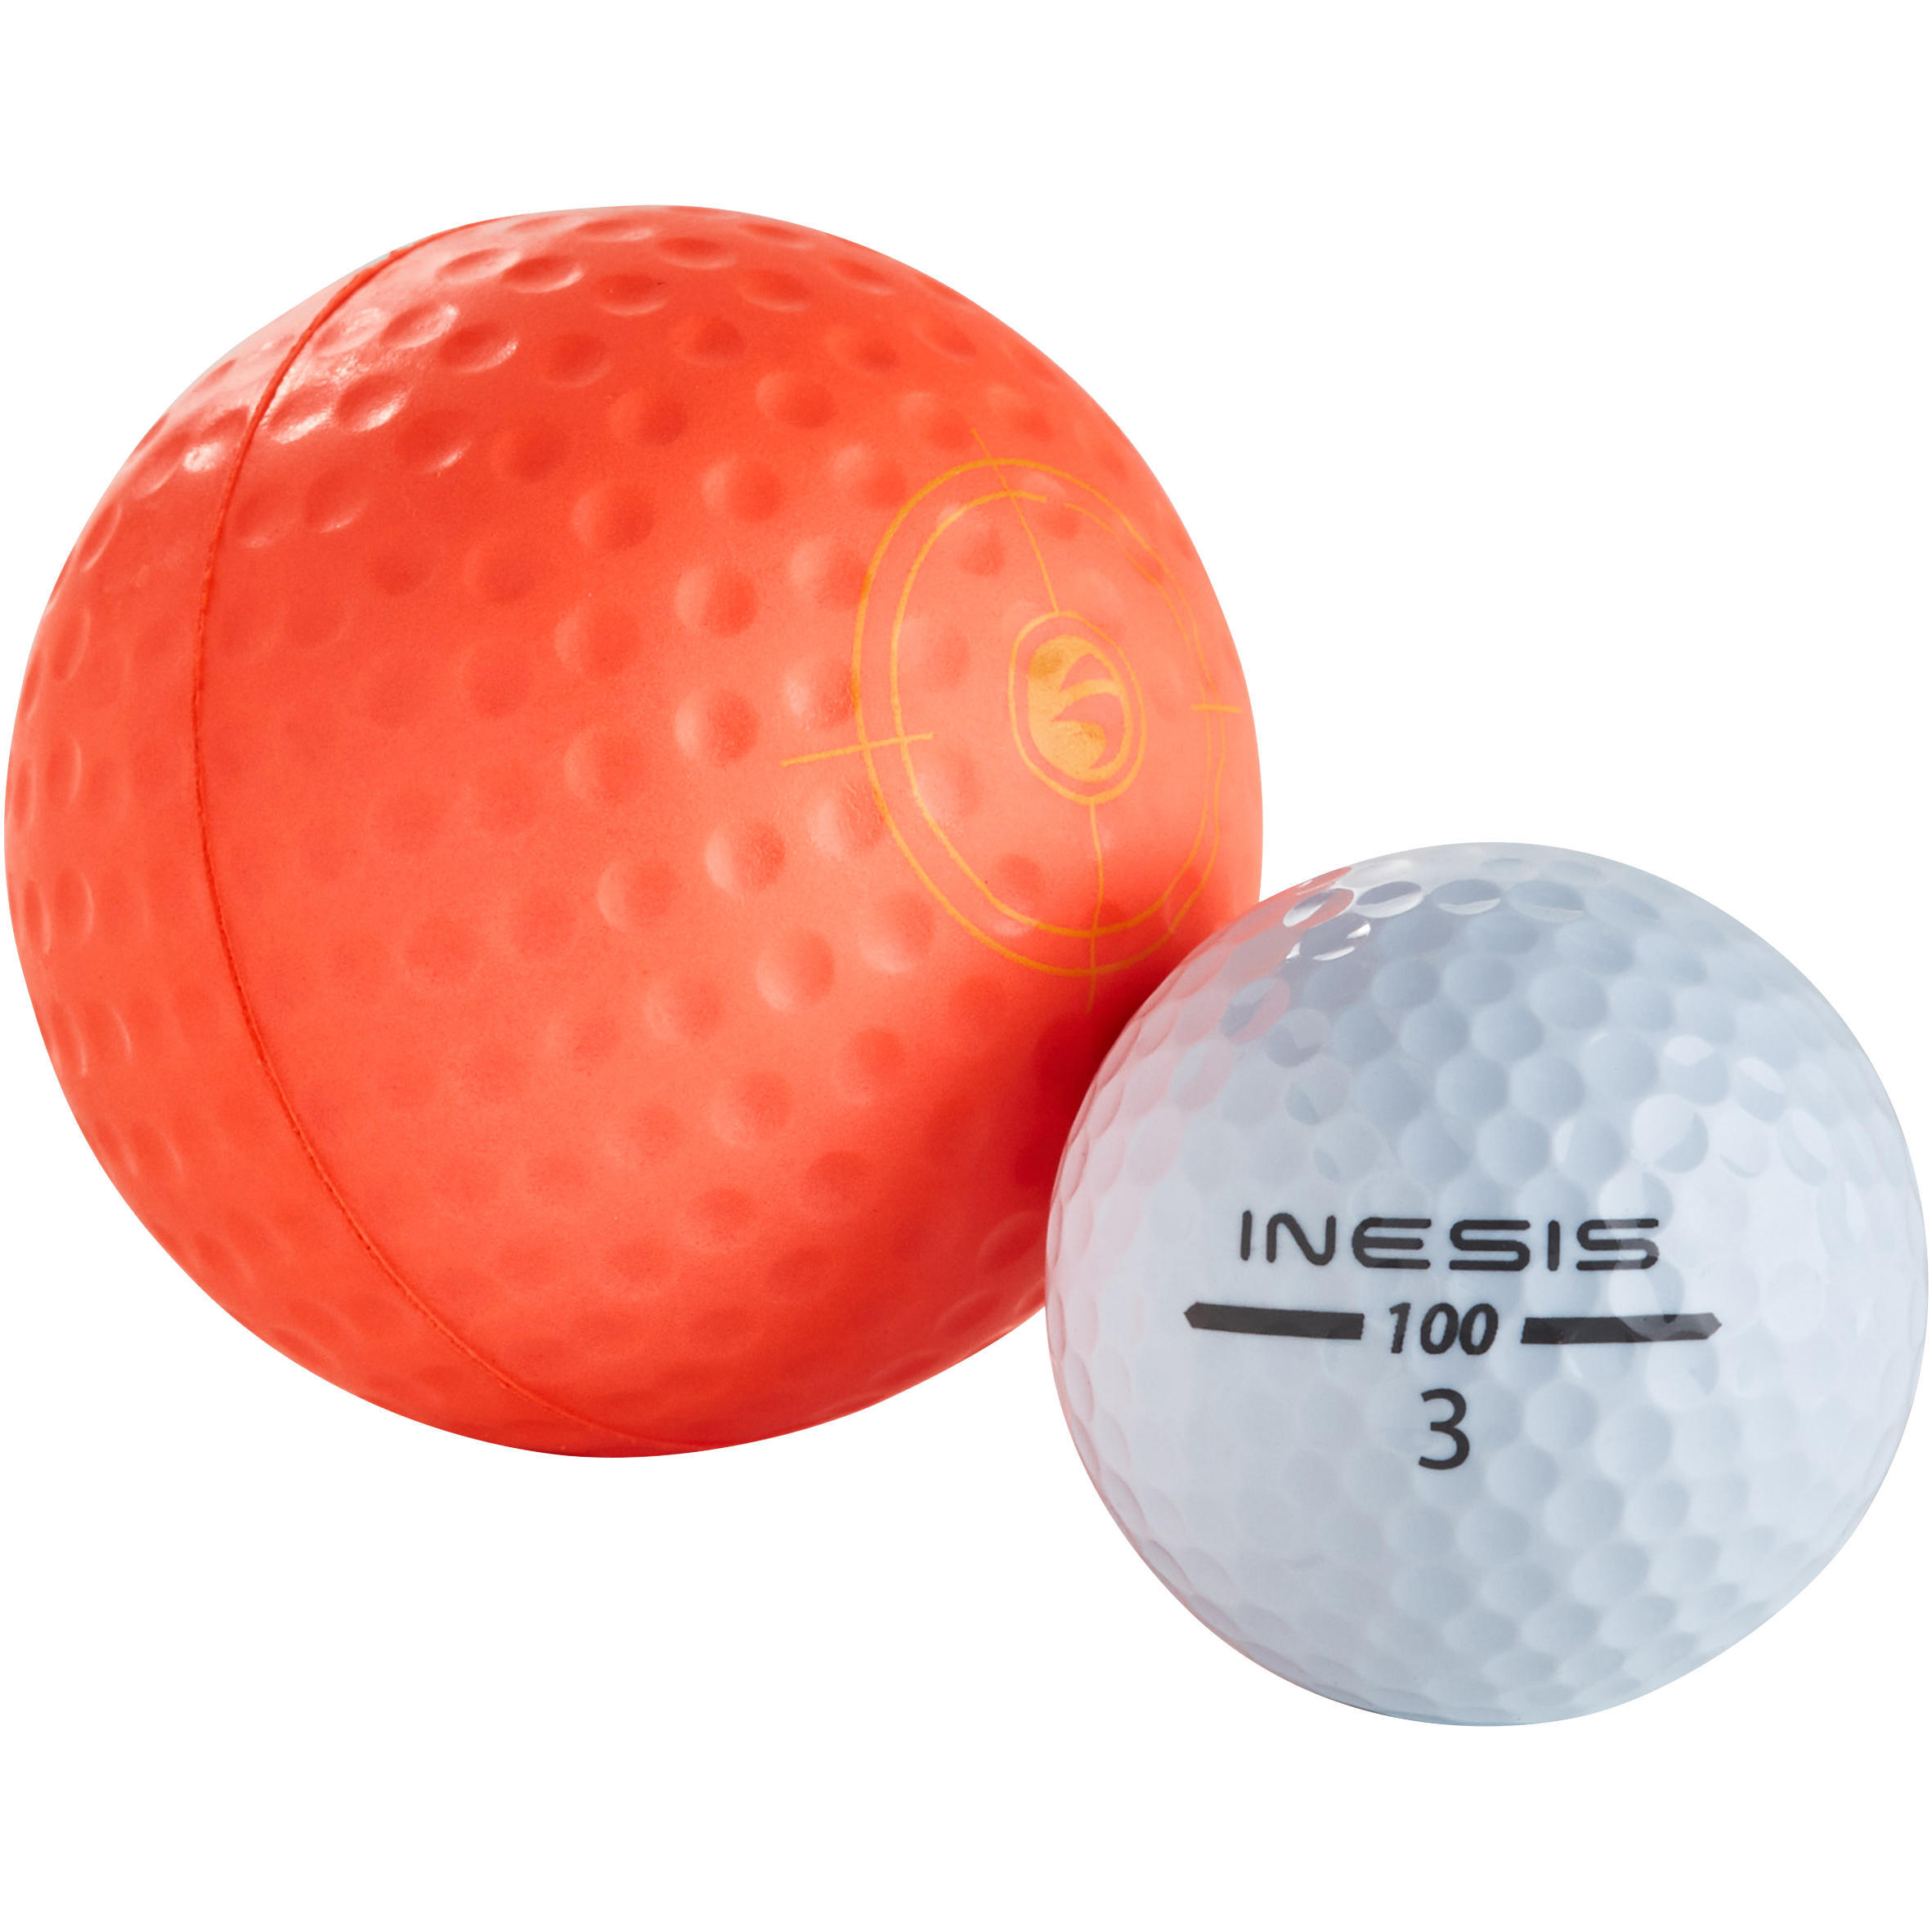 Kids' golf foam ball x1 - INESIS coral pink 3/5